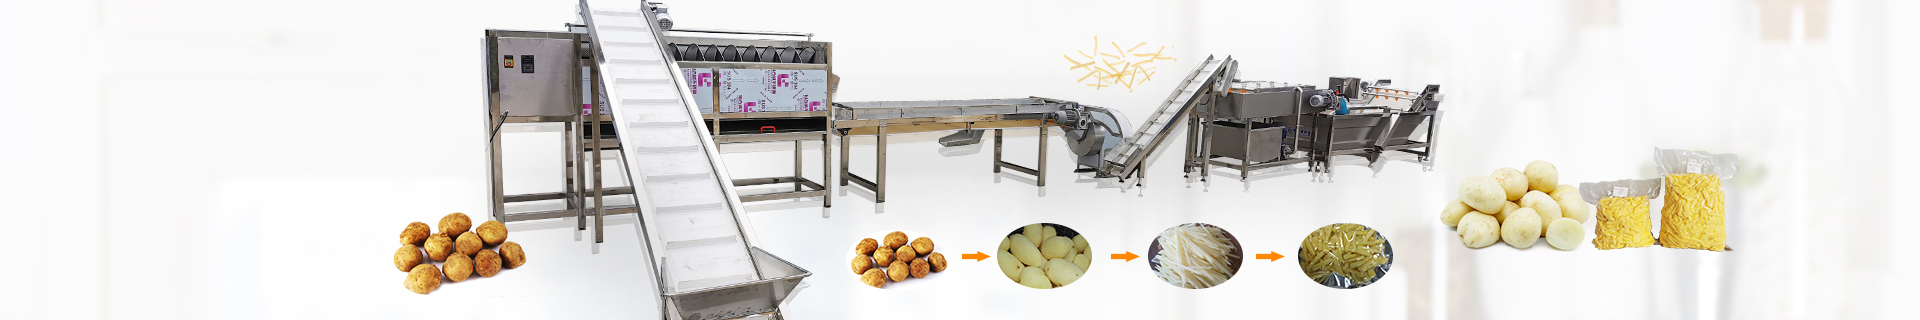 Potatovegetablecleaningequipment/fruitwasher